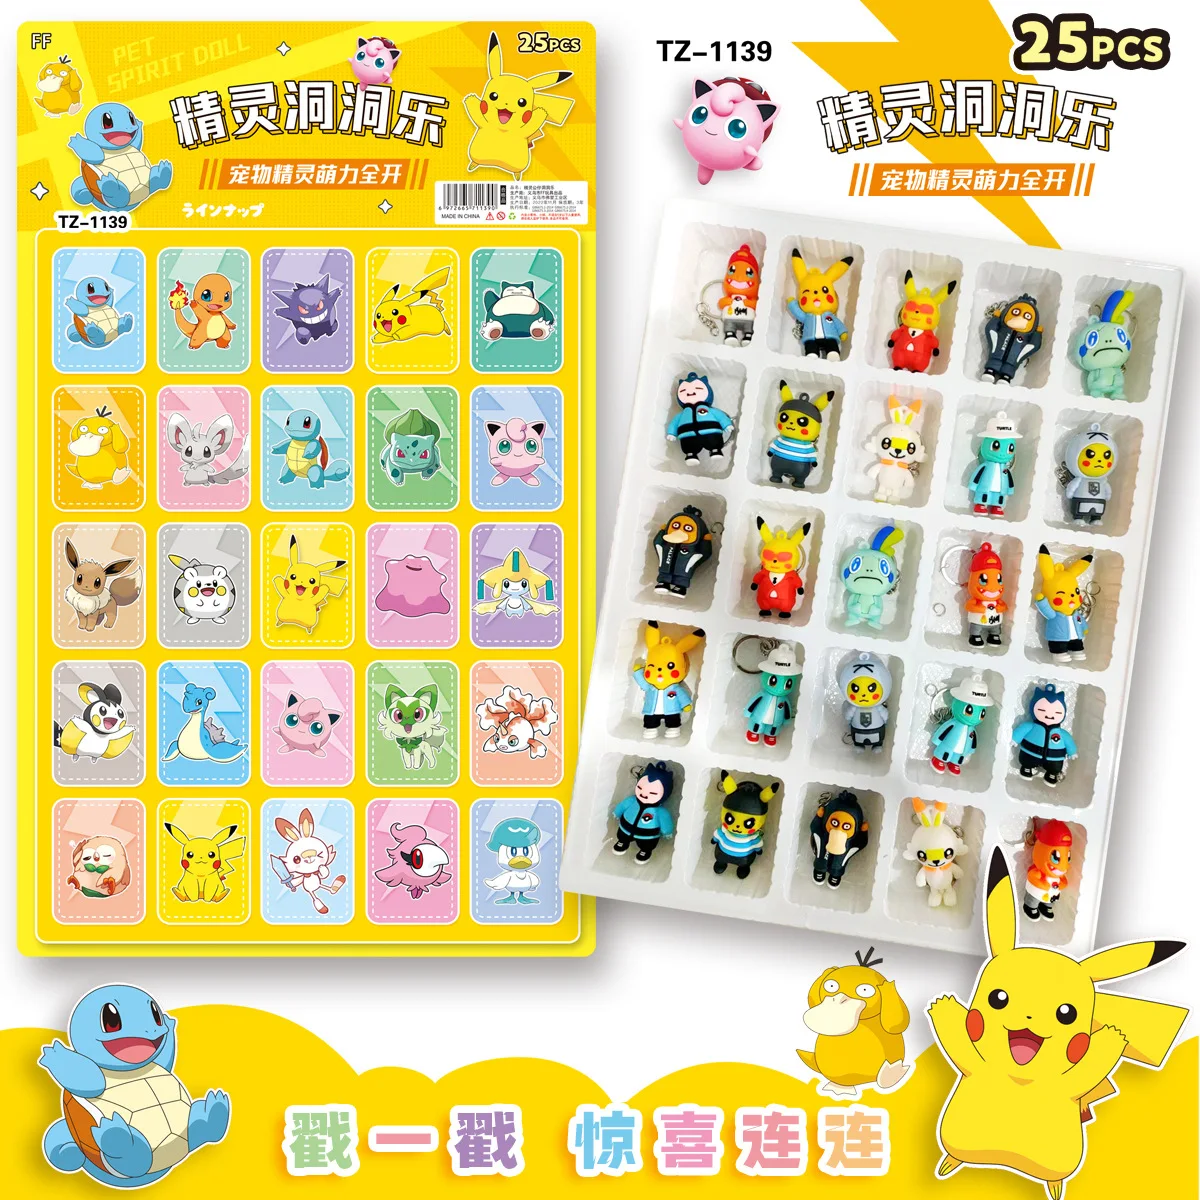 (Wholesale) Anime cartoon PVC pokemoned keychain blind box toys figure for gift